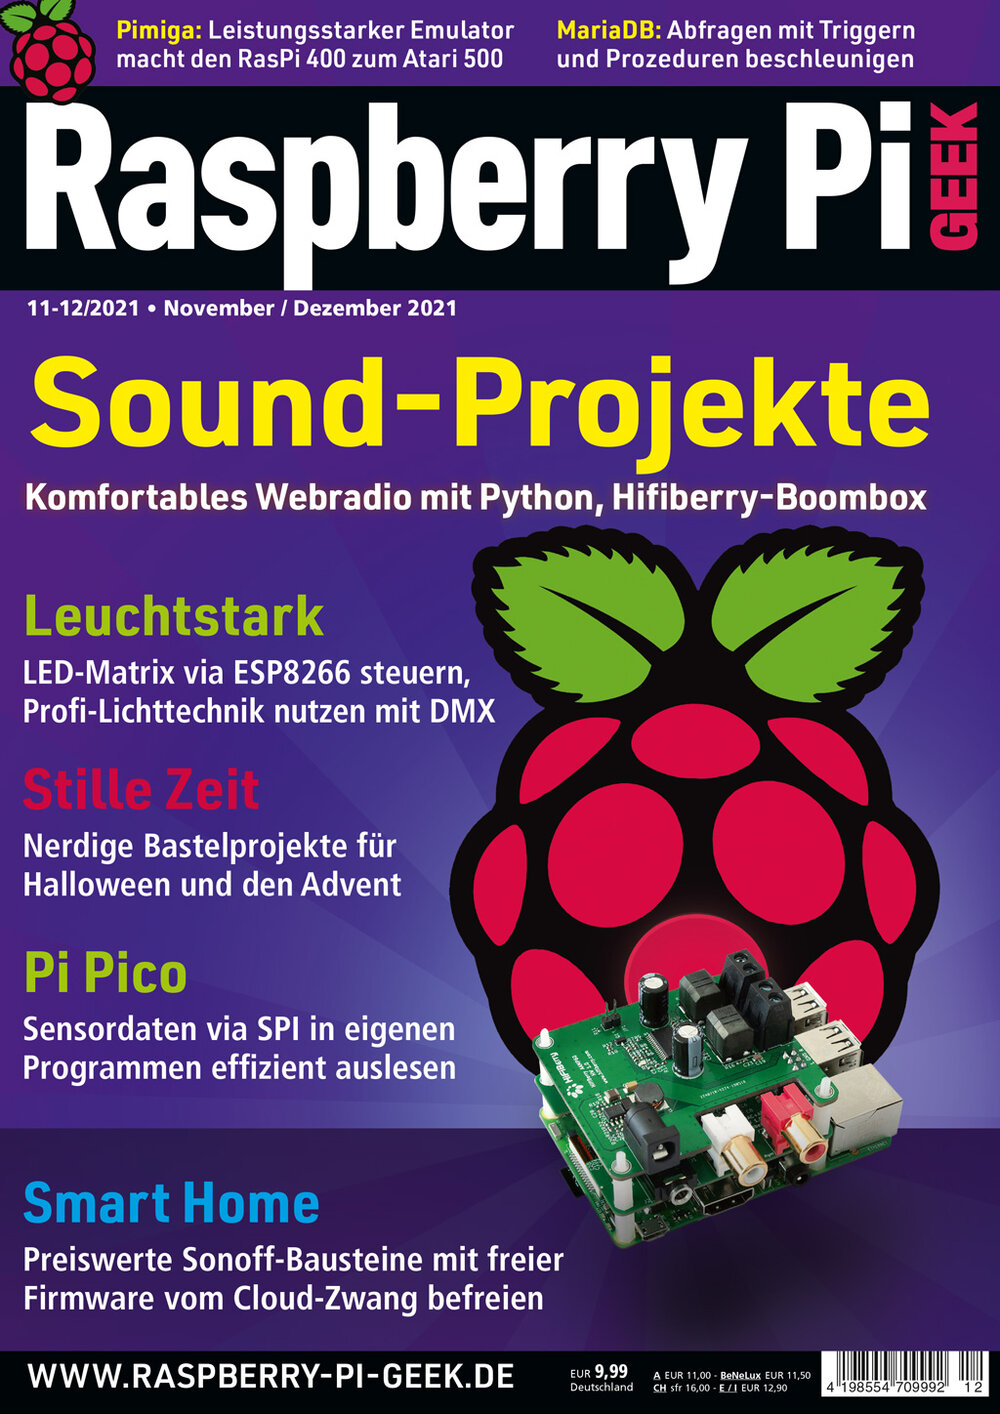 Raspberry Pi Geek ePaper 12/2021